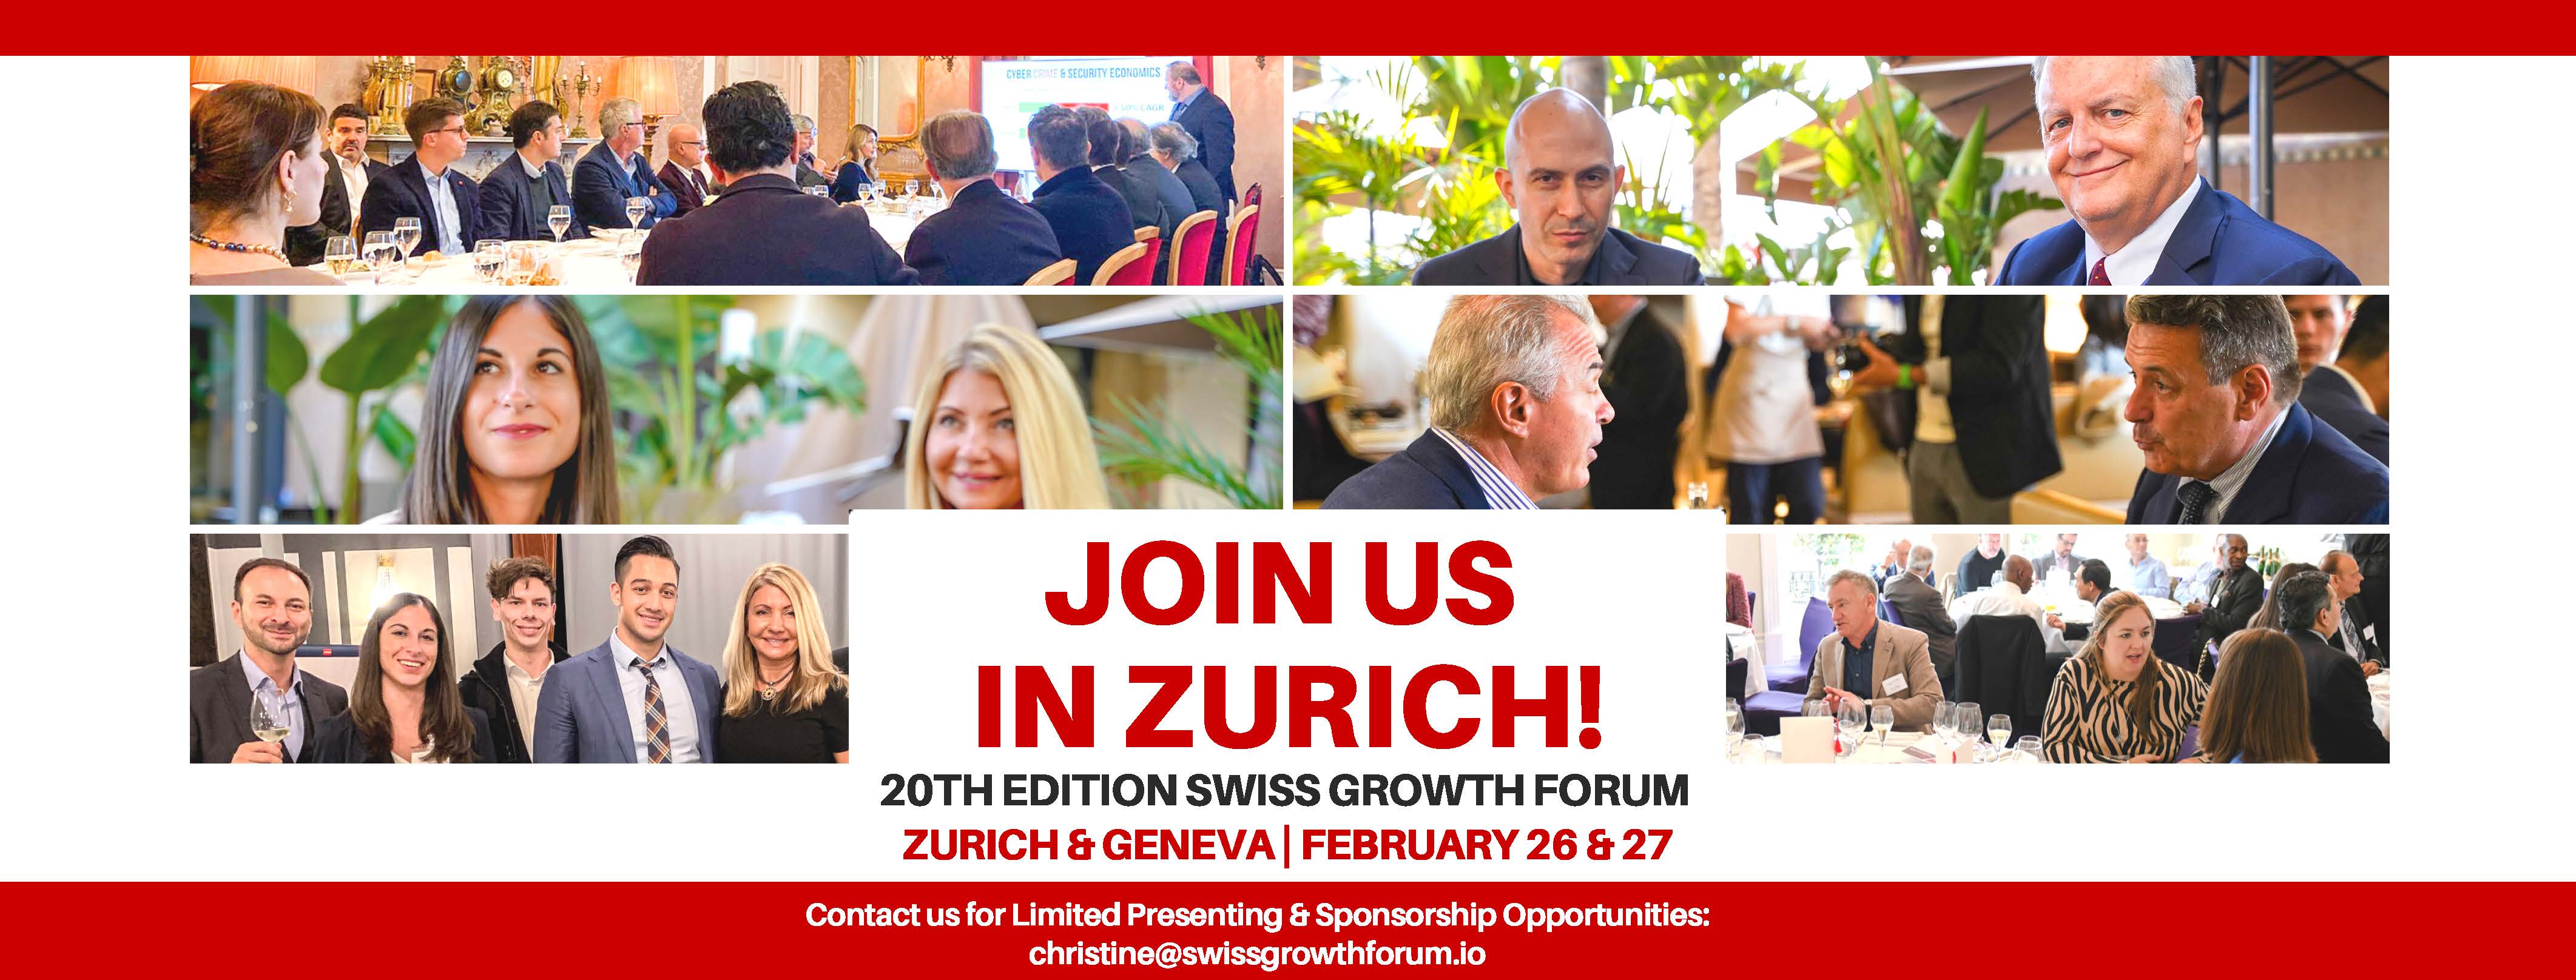 Swiss Growth Forum 2020 Winter Edition in Zurich organized by Swiss Growth Forum